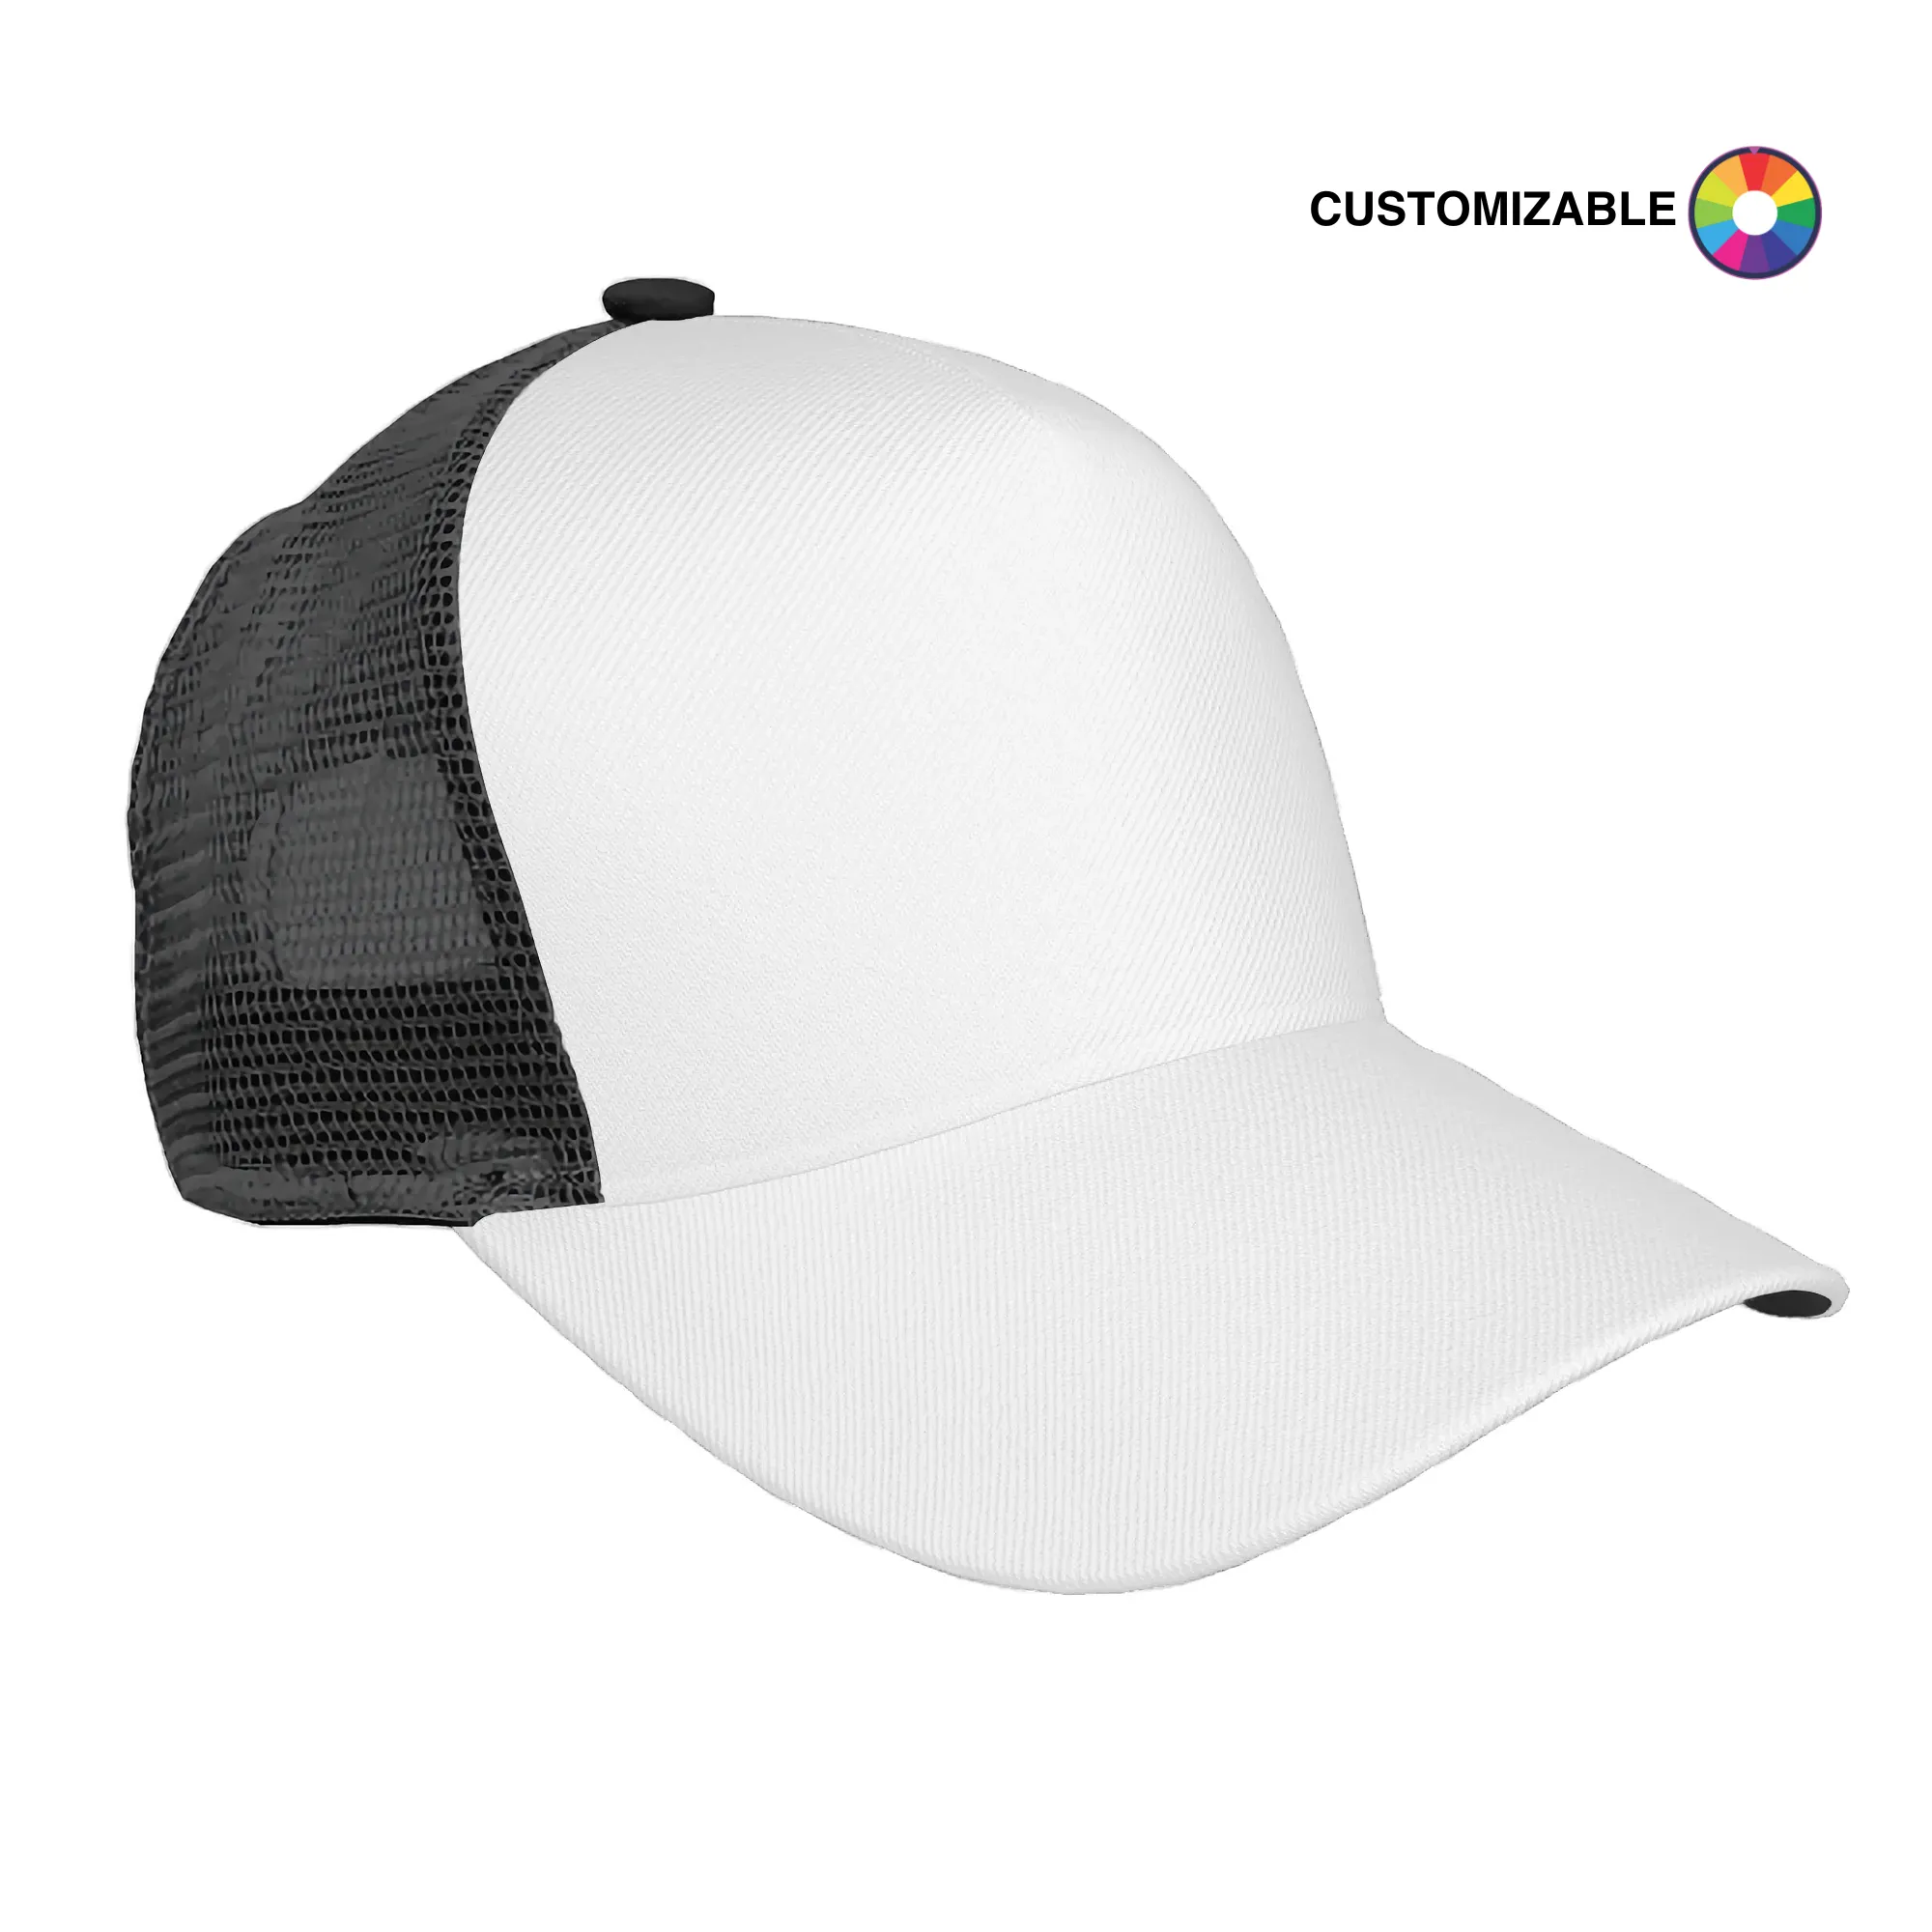 Customizable Curved Brim Mesh Baseball Cap